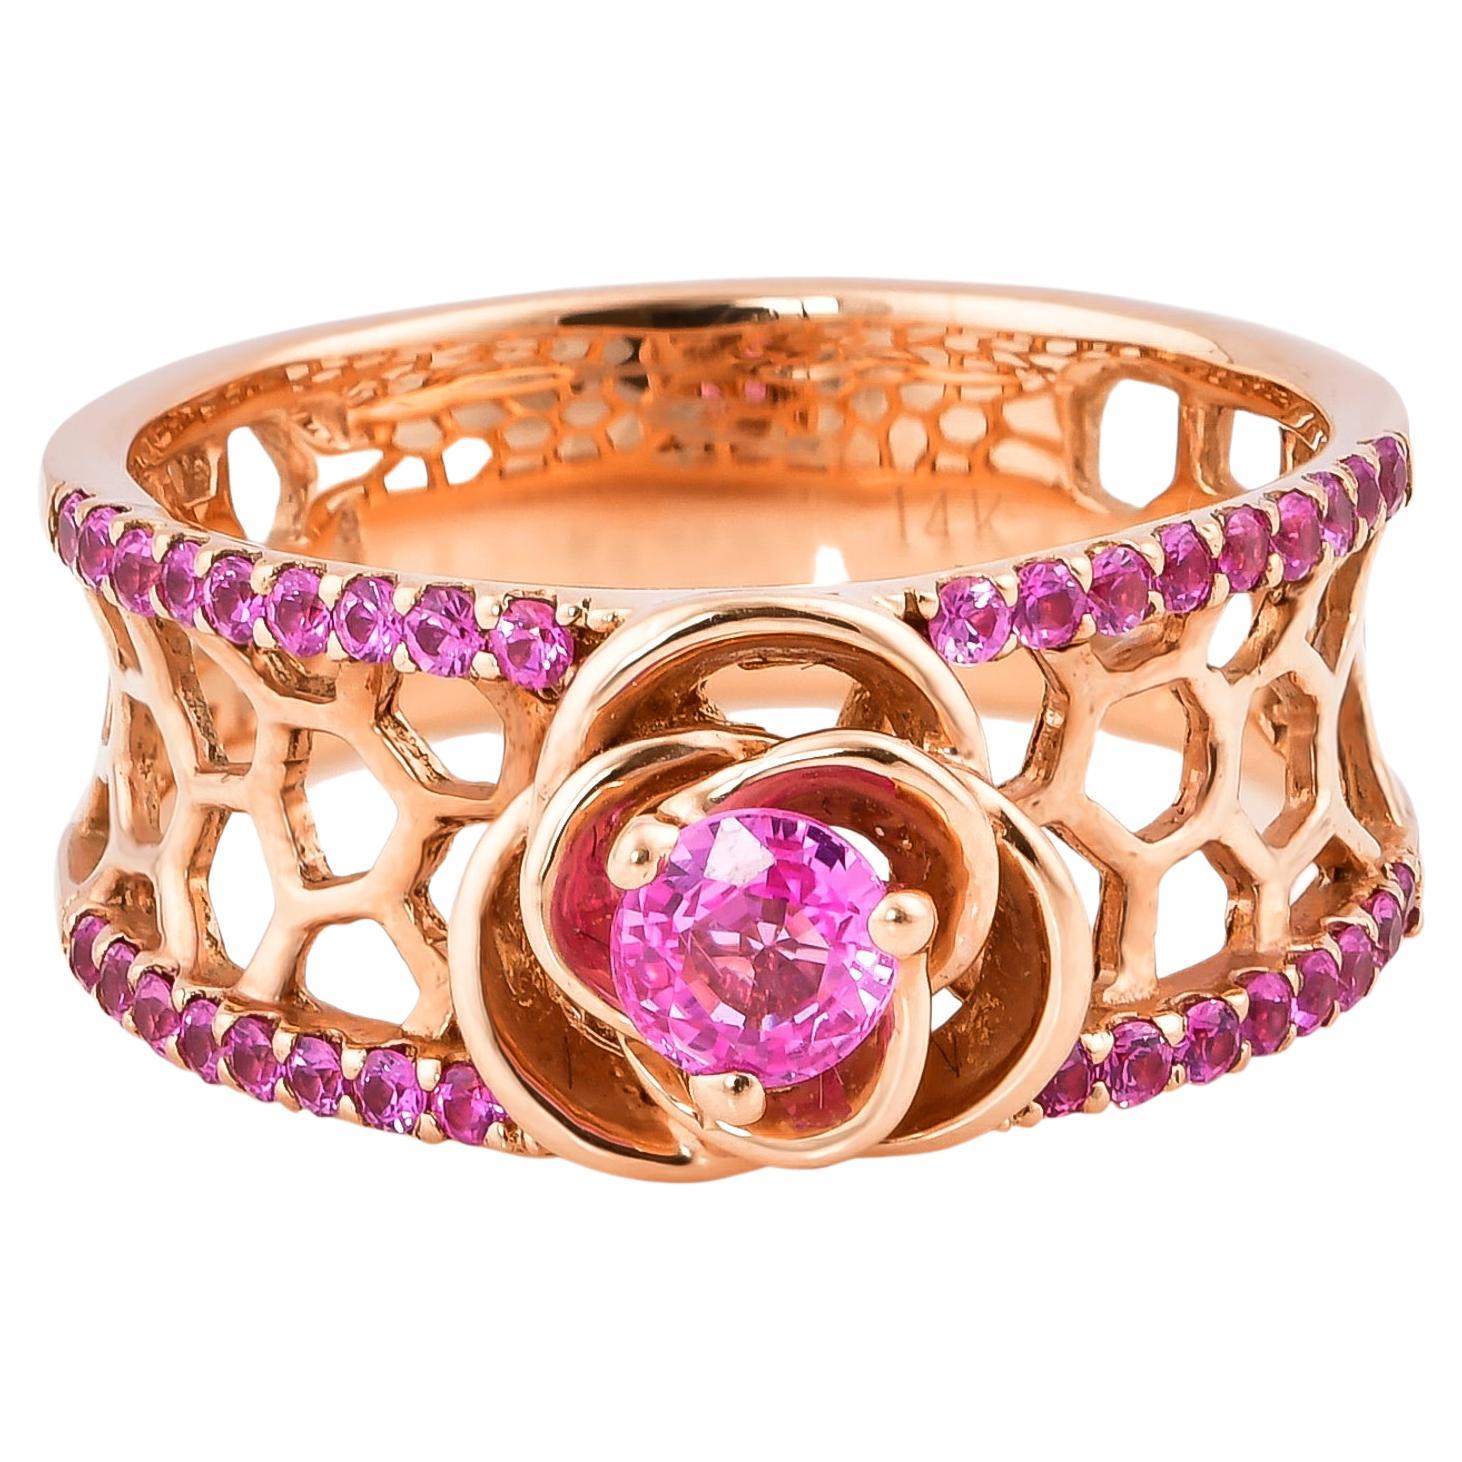 0.723 Carat Pink Sapphire Ring in 14 Karat Rose Gold For Sale